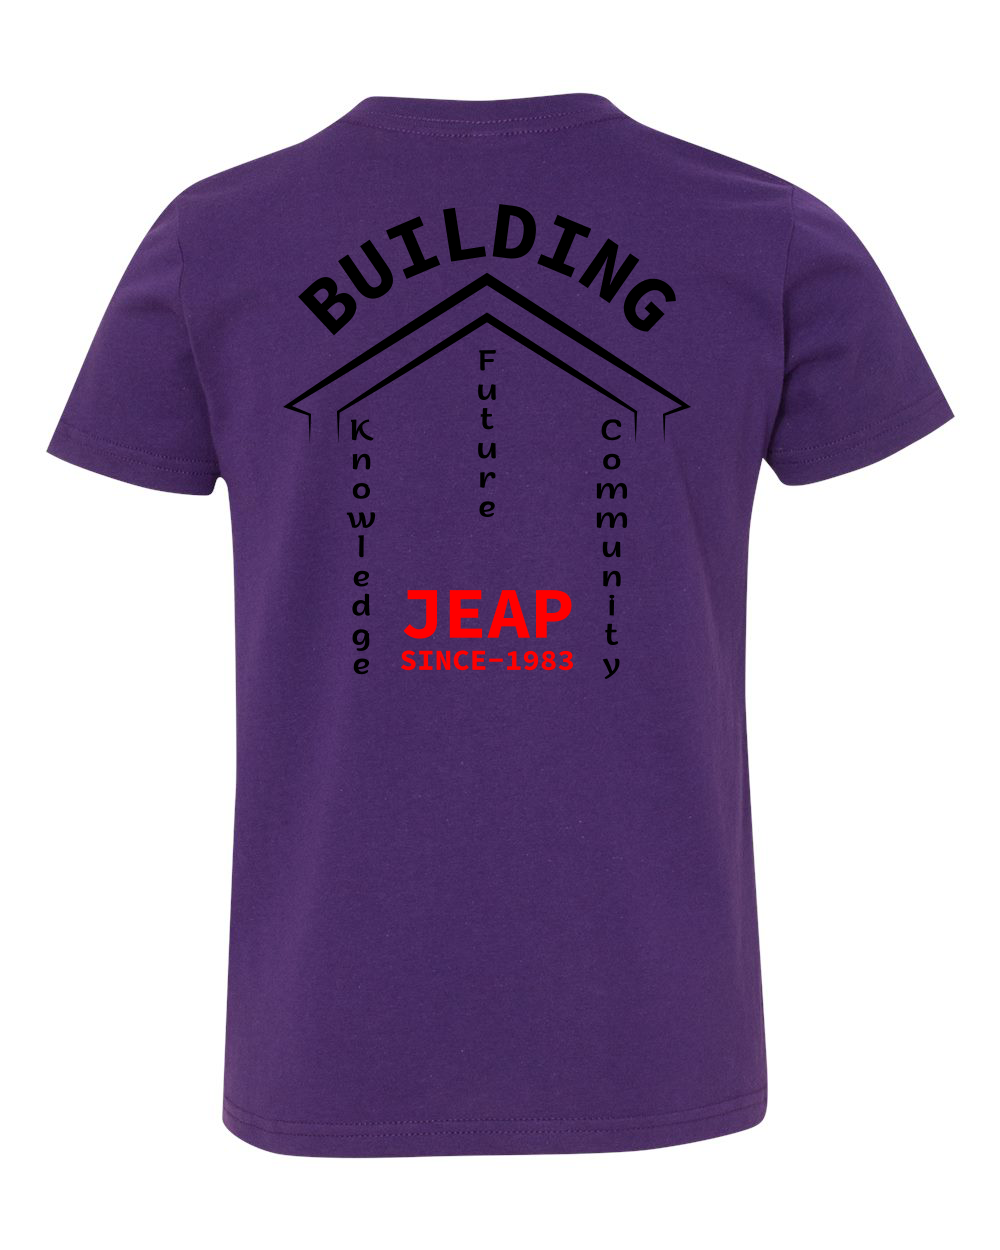 Jeap Rectangle (Student-Made Design)